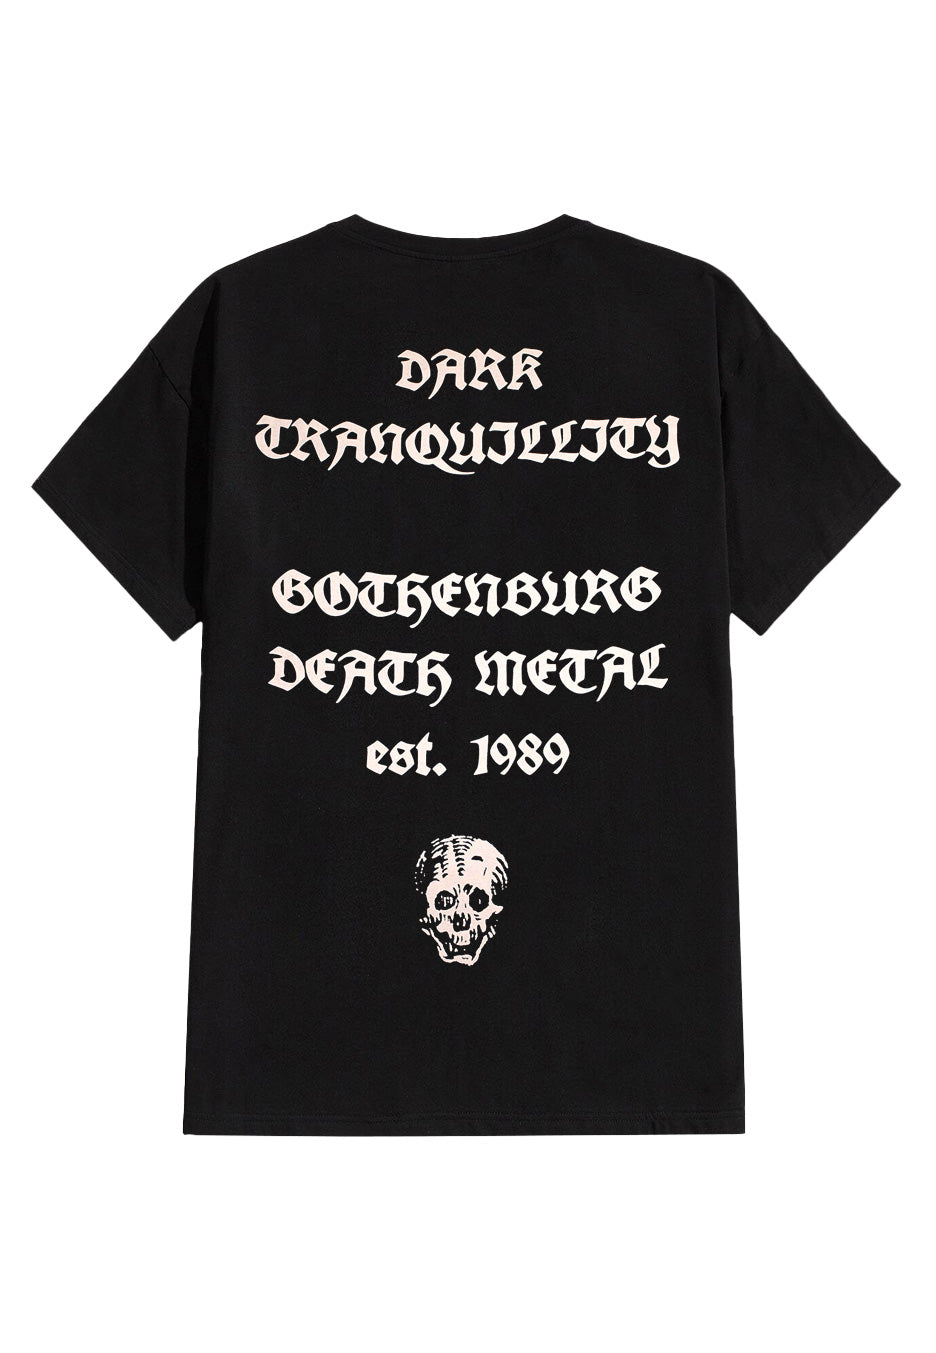 Dark Tranquillity - Old School - T-Shirt